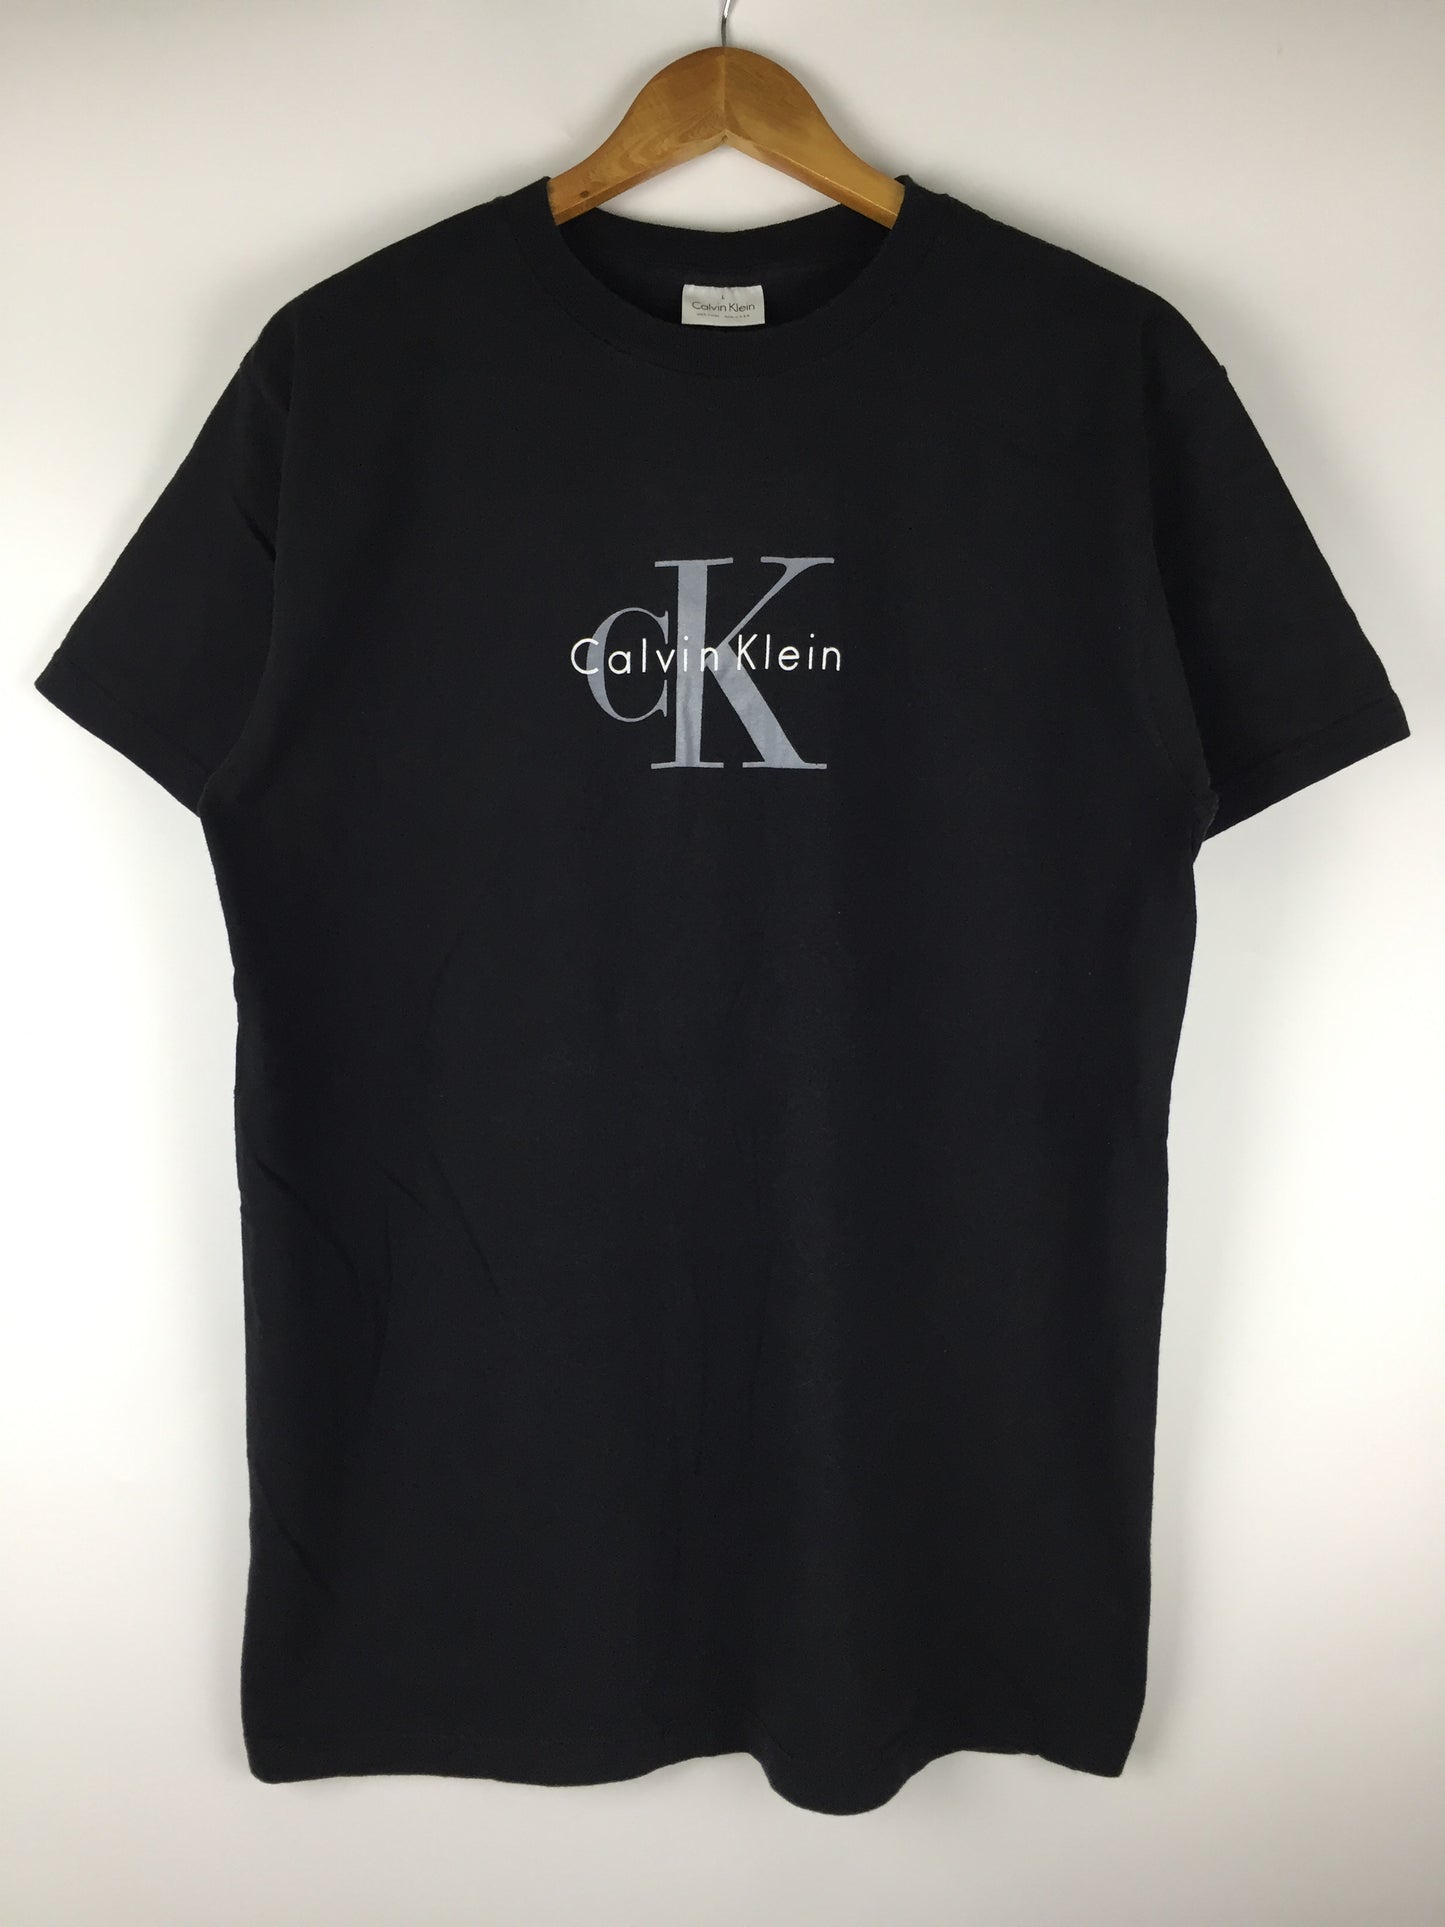 Vintage Calvin Klein Spellouts logo 90's made in USA Tshirt